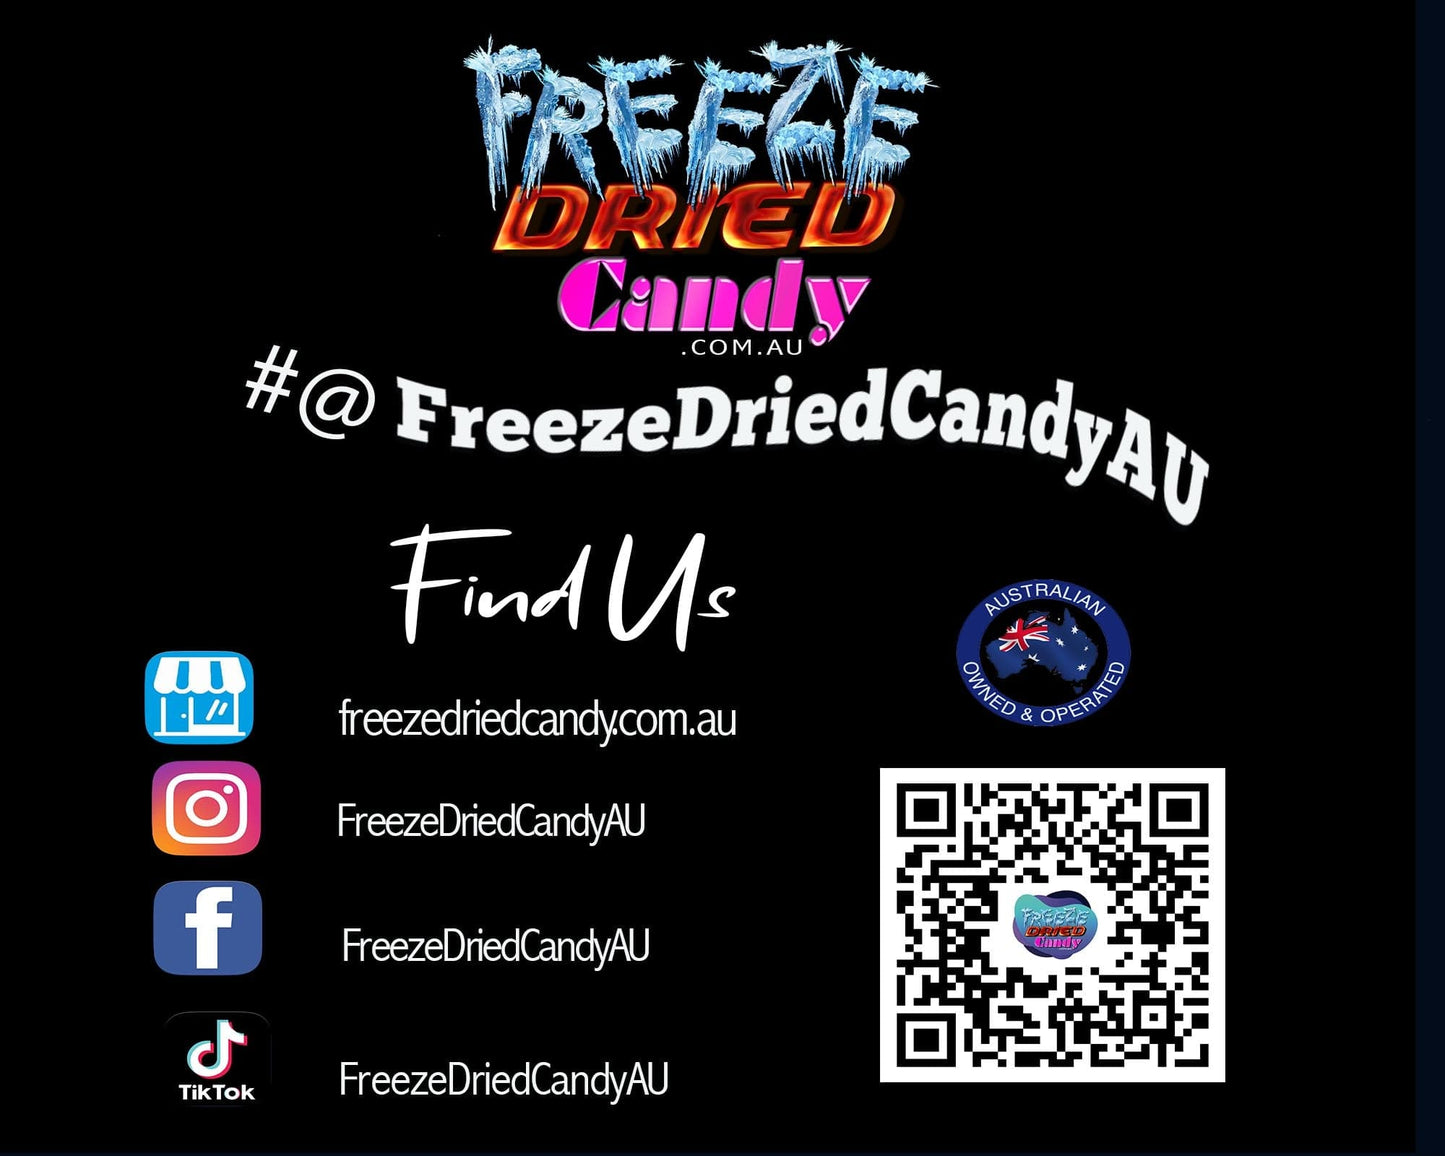 Find Us on the internet https://freezedriedcandy.com.au